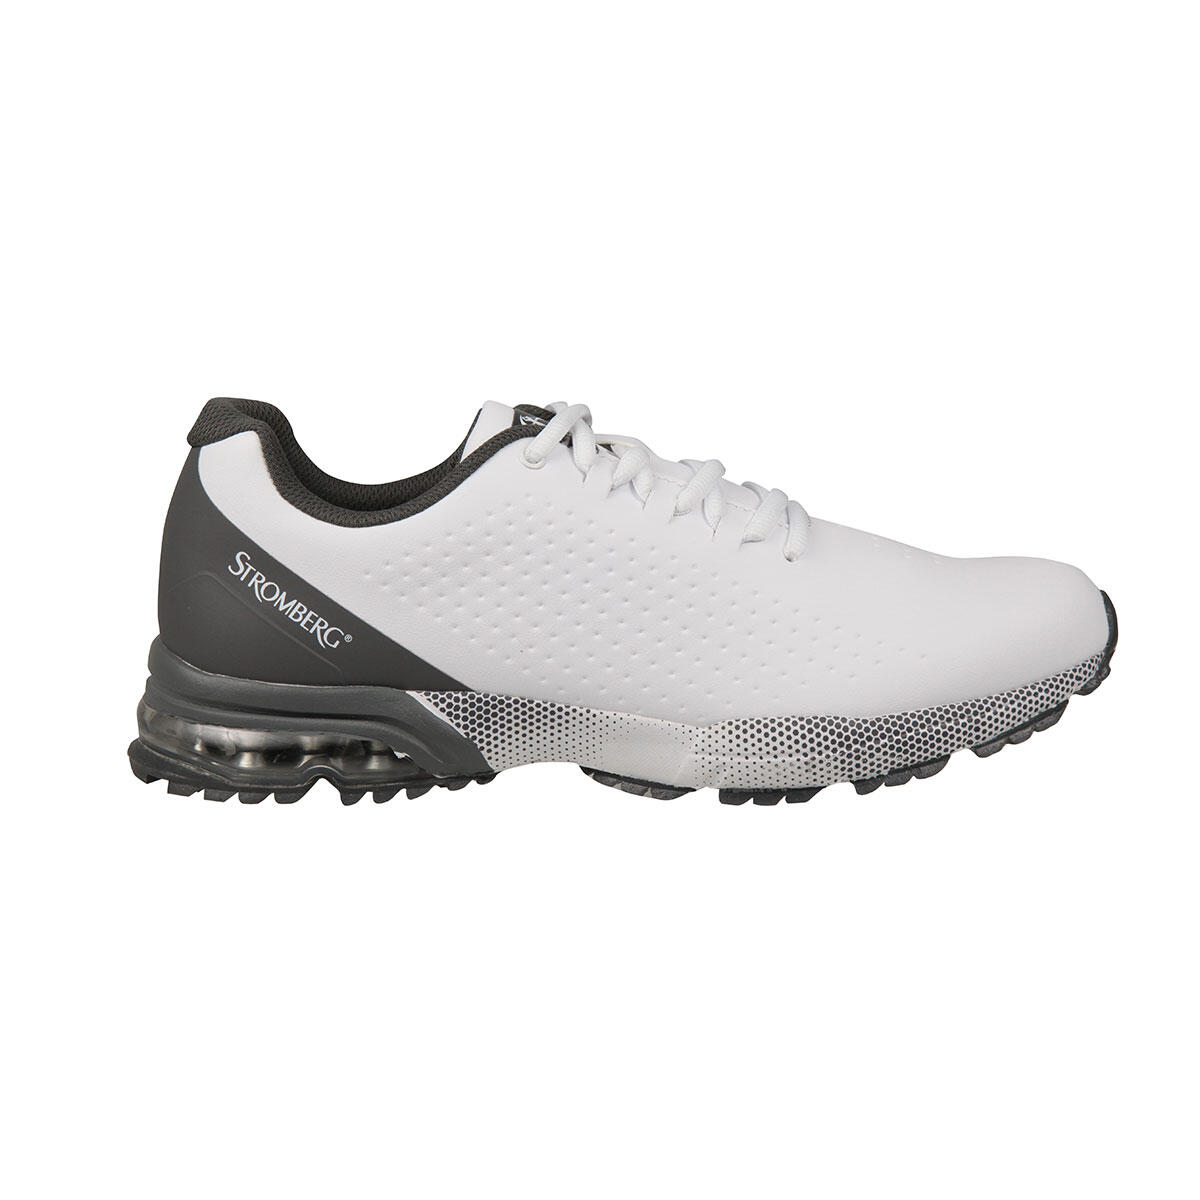 STROMBERG Stromberg Men's Ailsa Waterproof Spikeless Golf Shoes